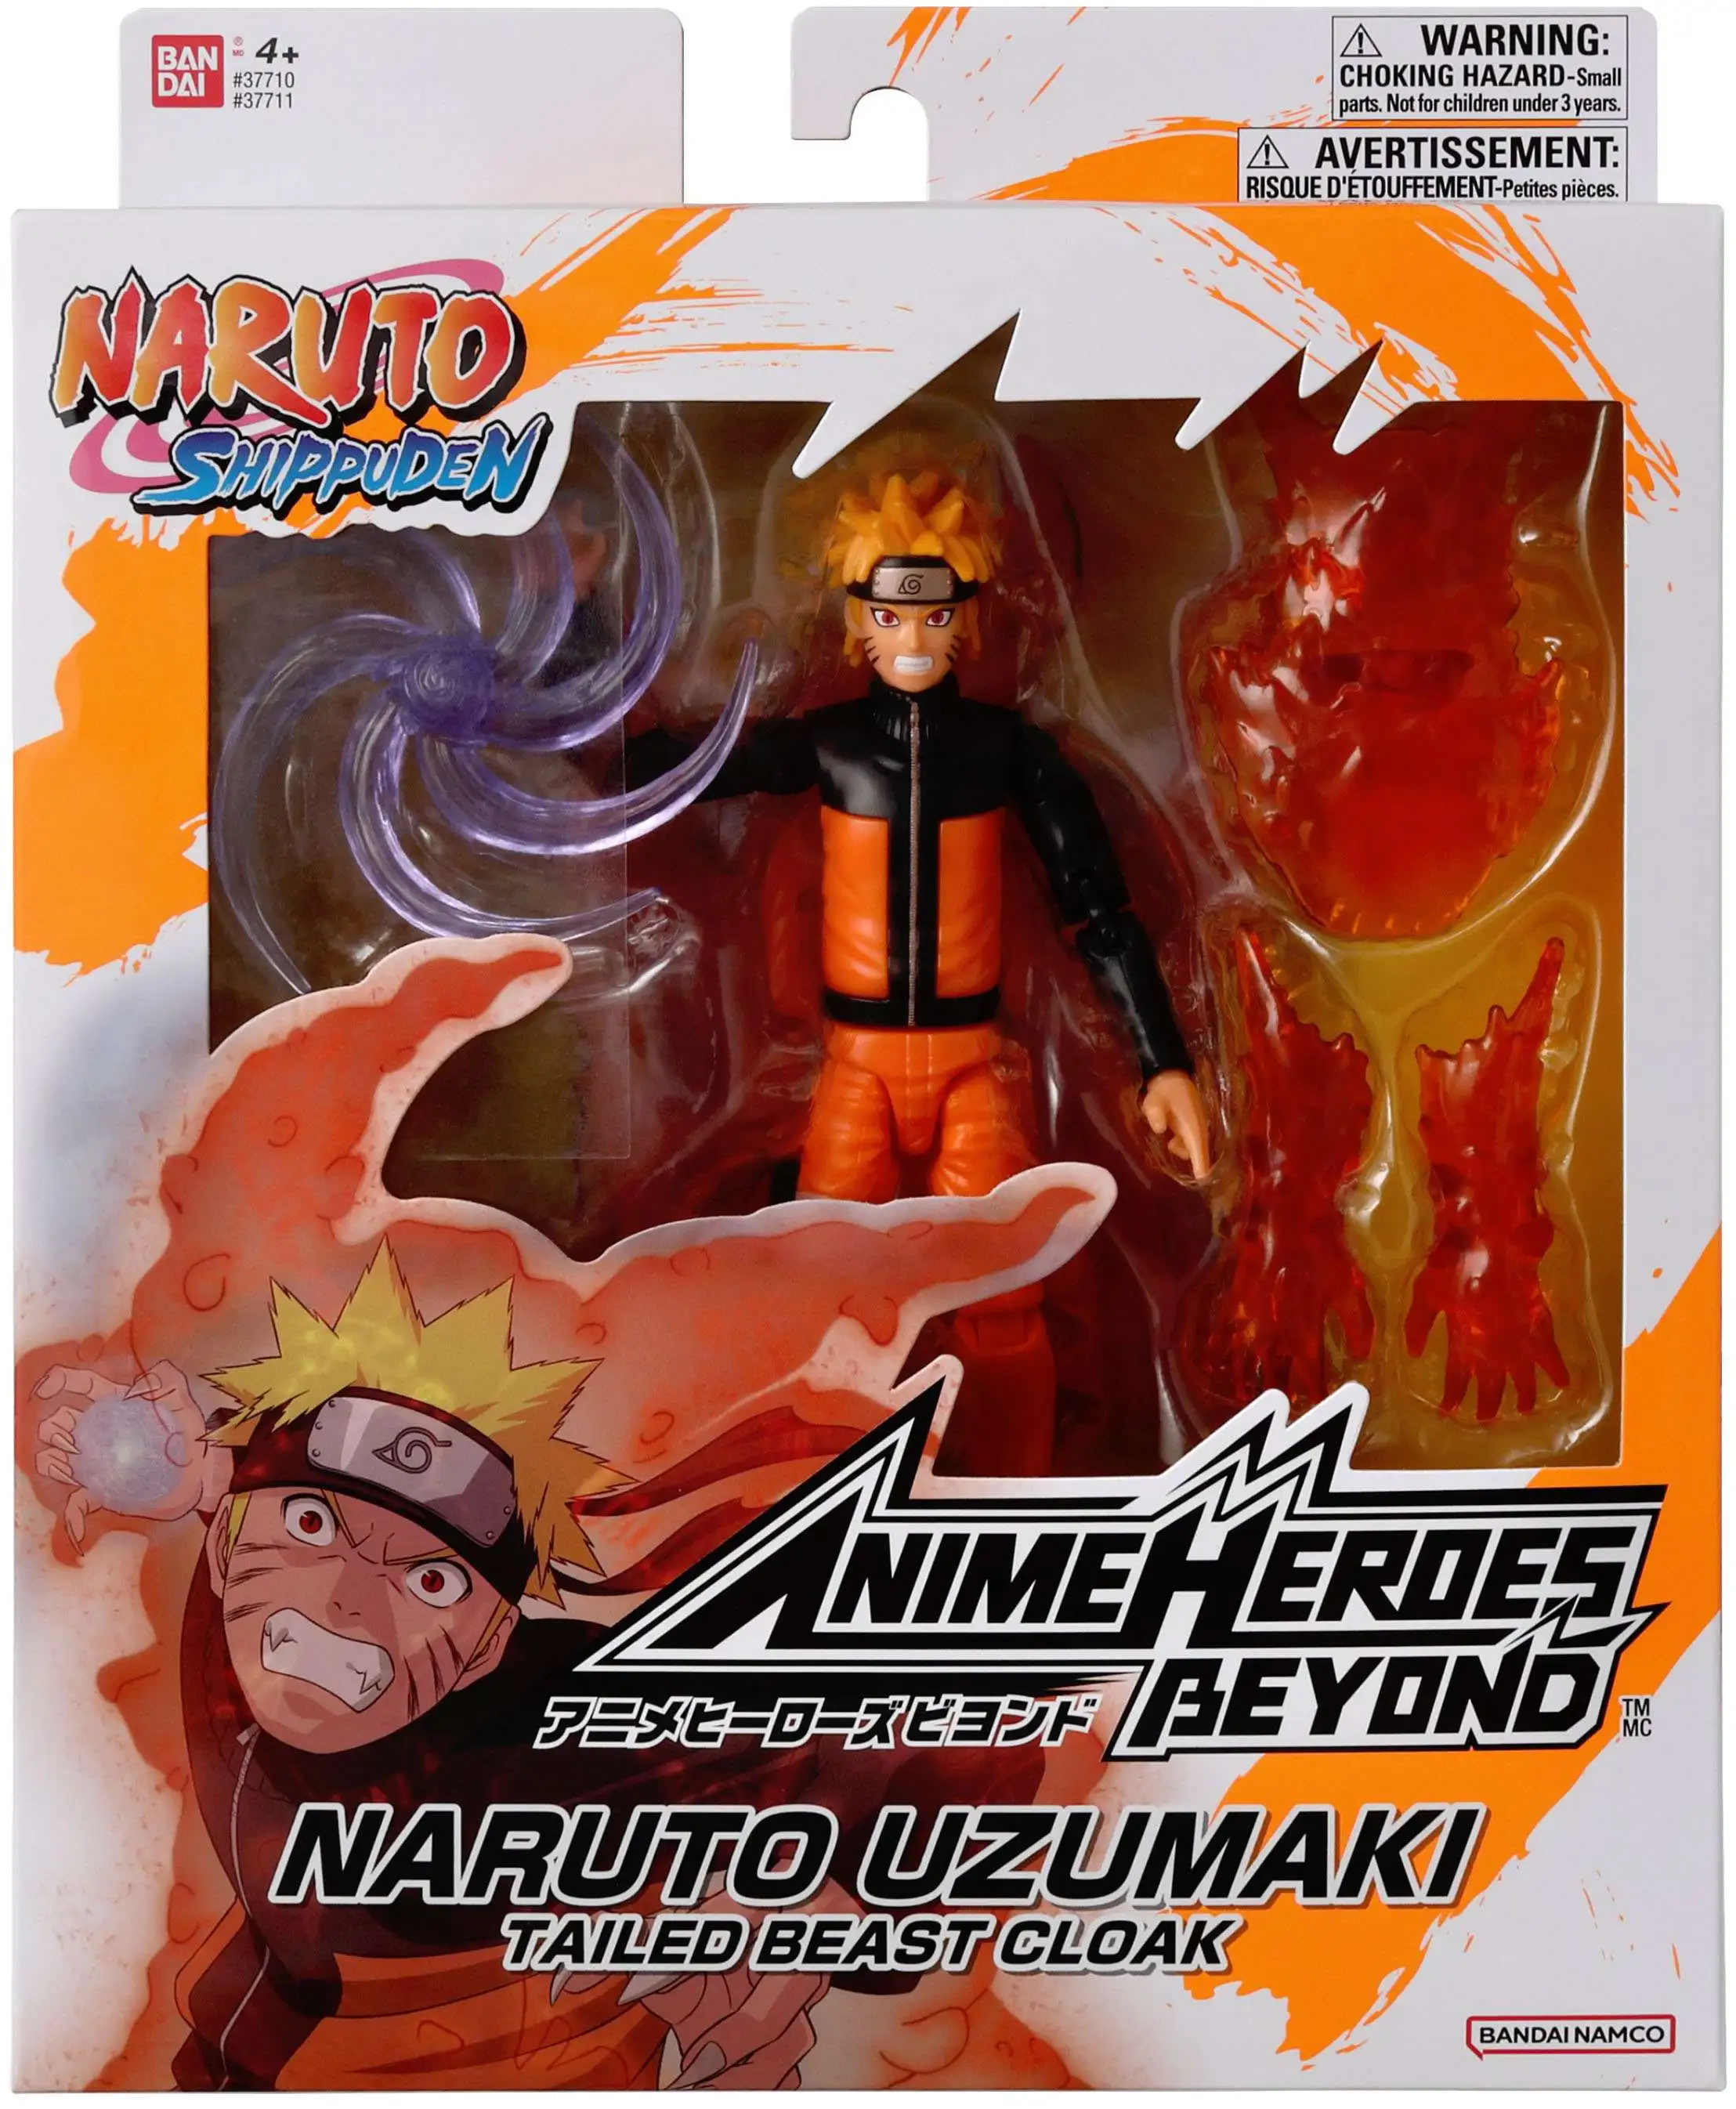 Naruto Shippuden Anime Heroes Beyond Naruto Uzamaki  Action Figure  Bandai America - ToyWiz